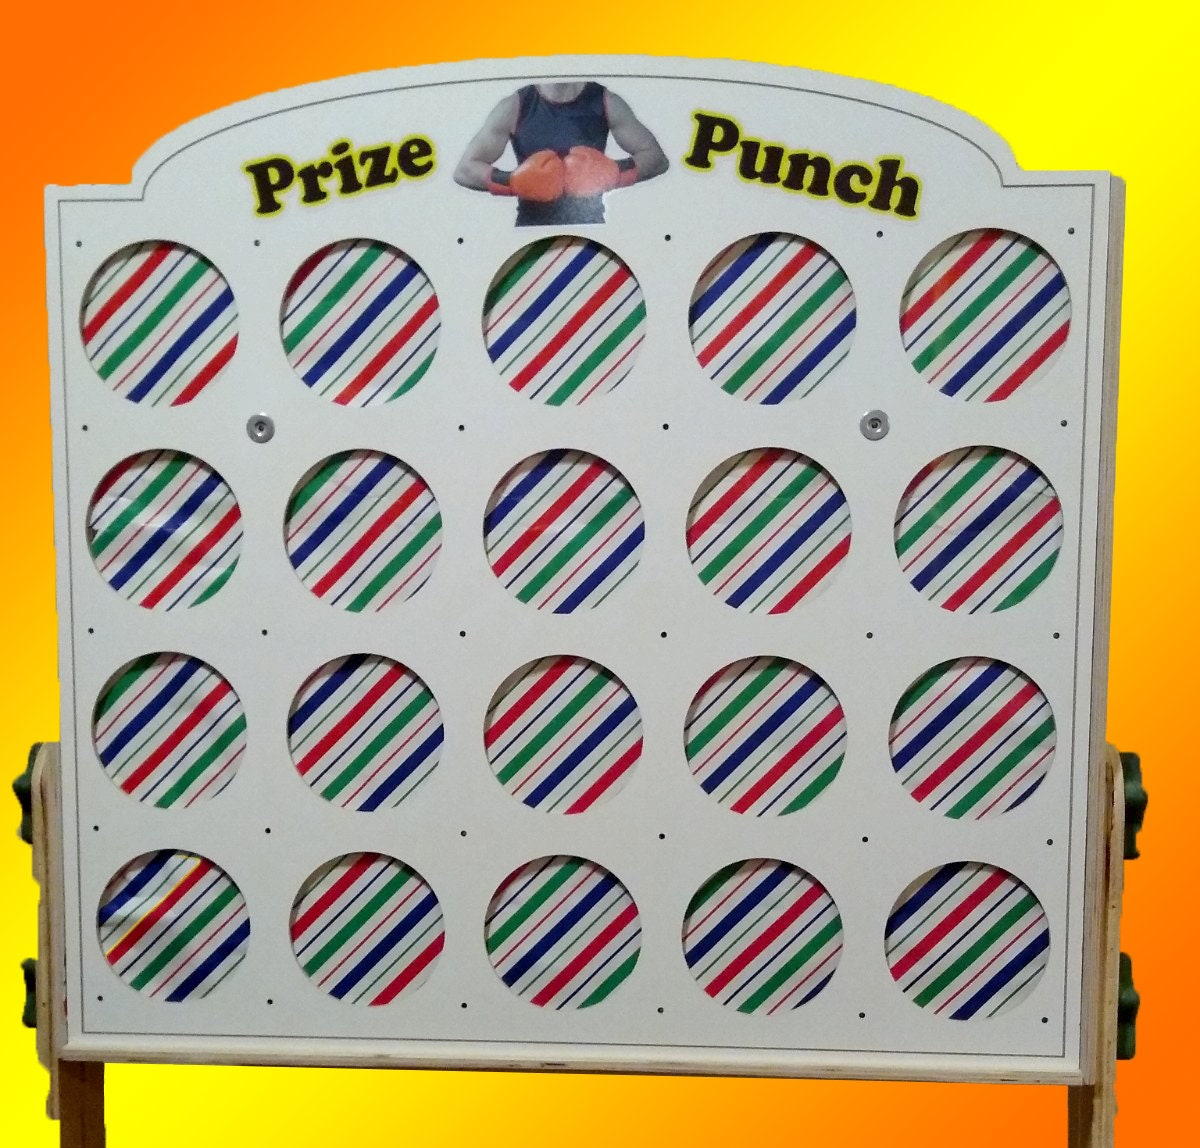 Punch Board Games, Online Shop